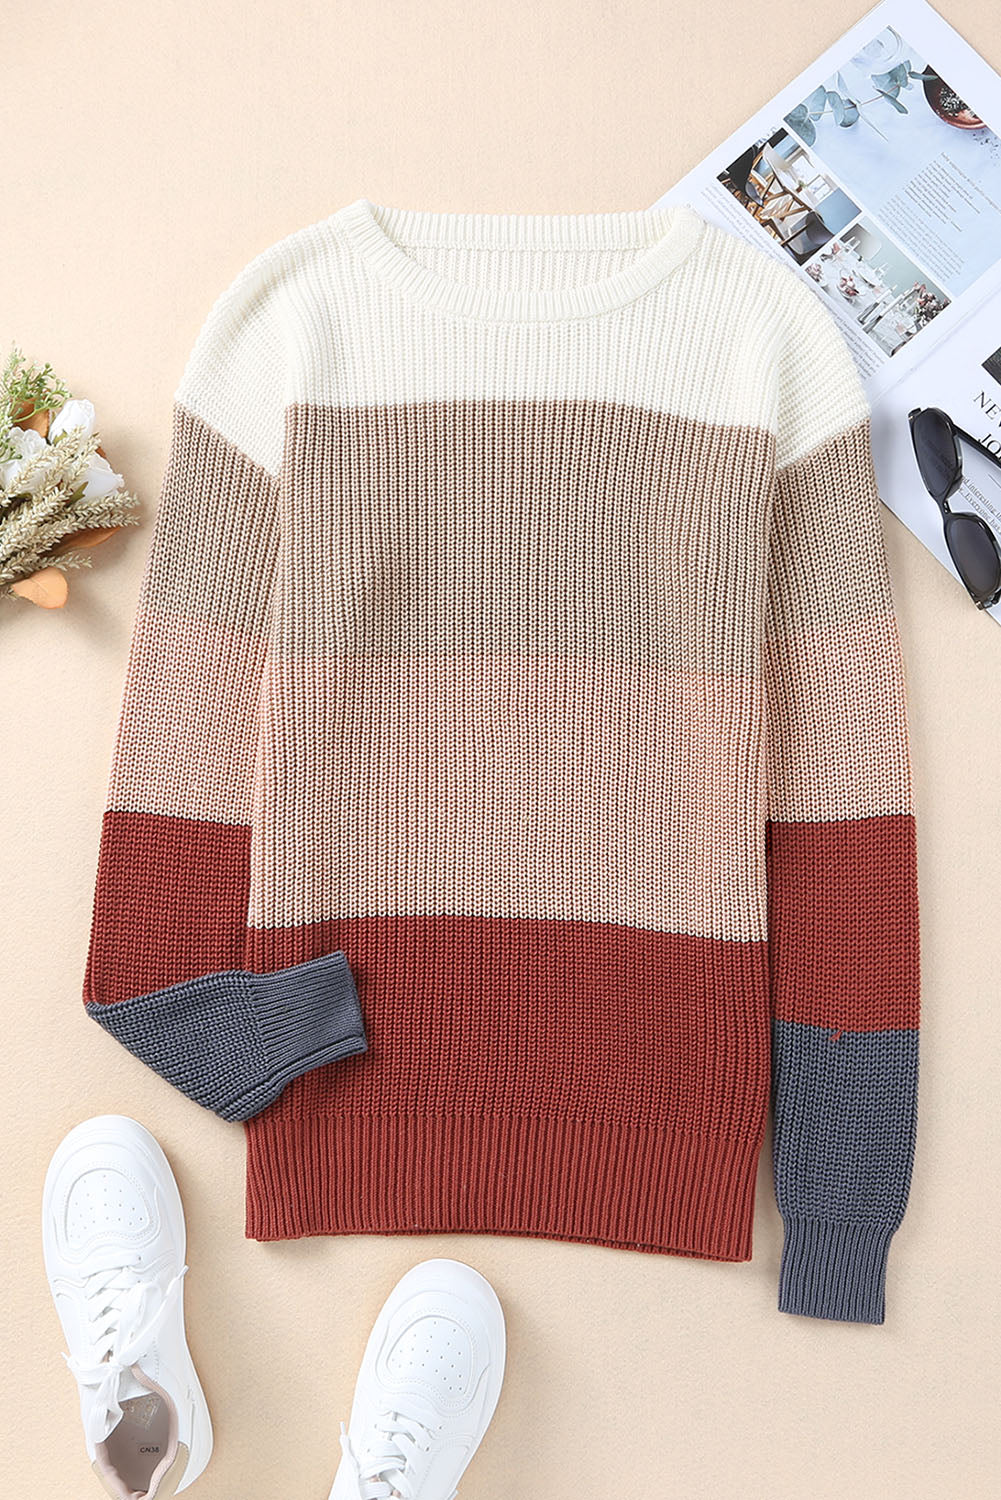 krissy chestnut block o-neck sweater - 3 color options